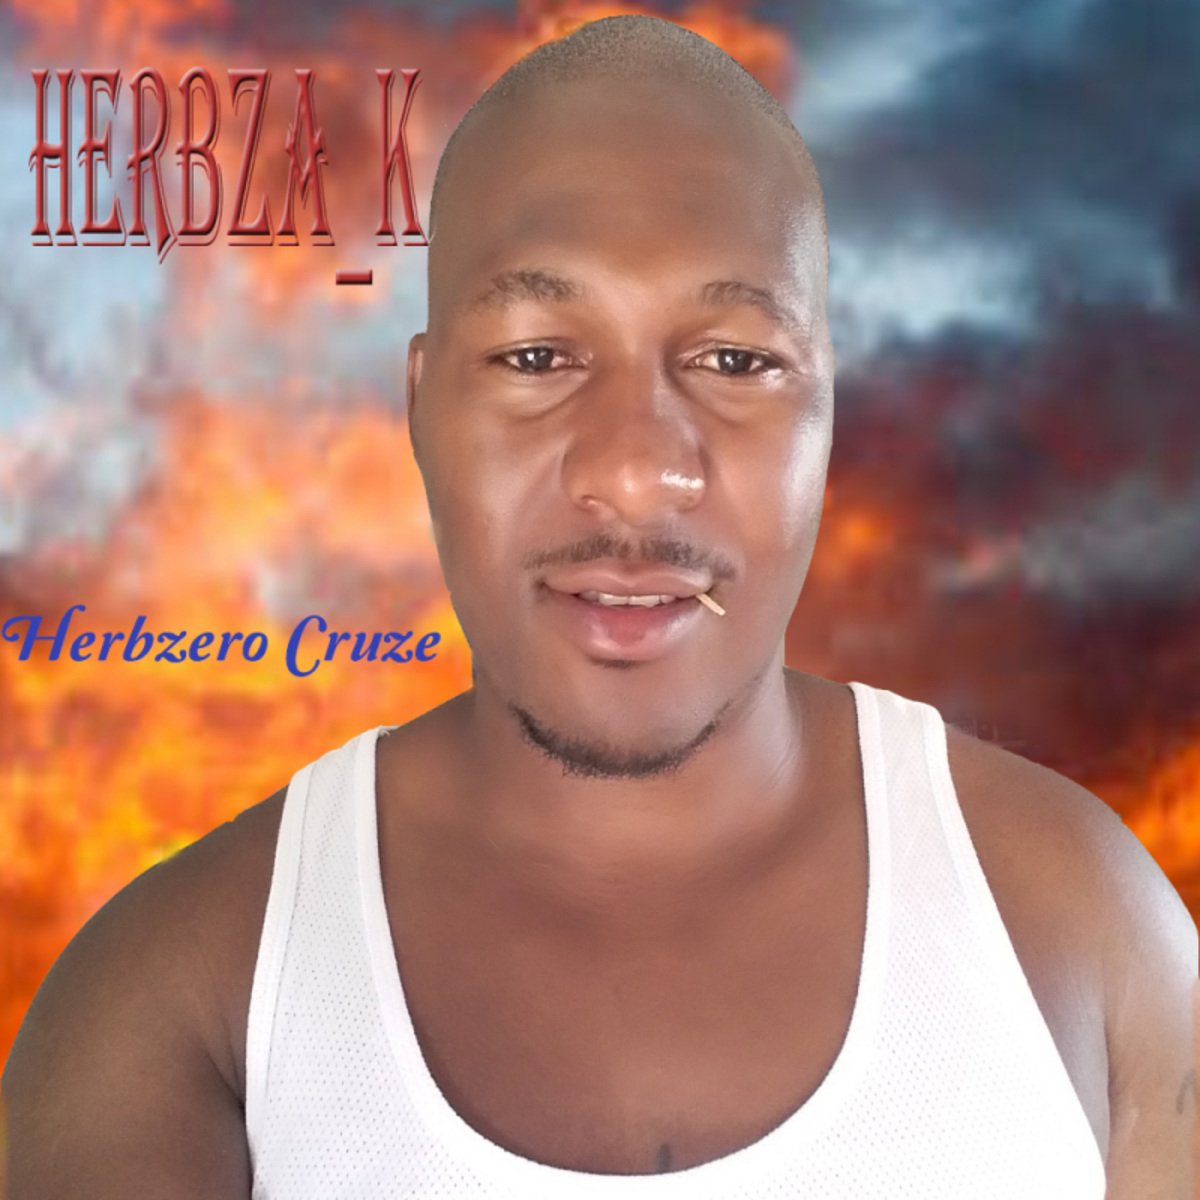 Herbza_K - Herbzero Cruze / Magerms Records